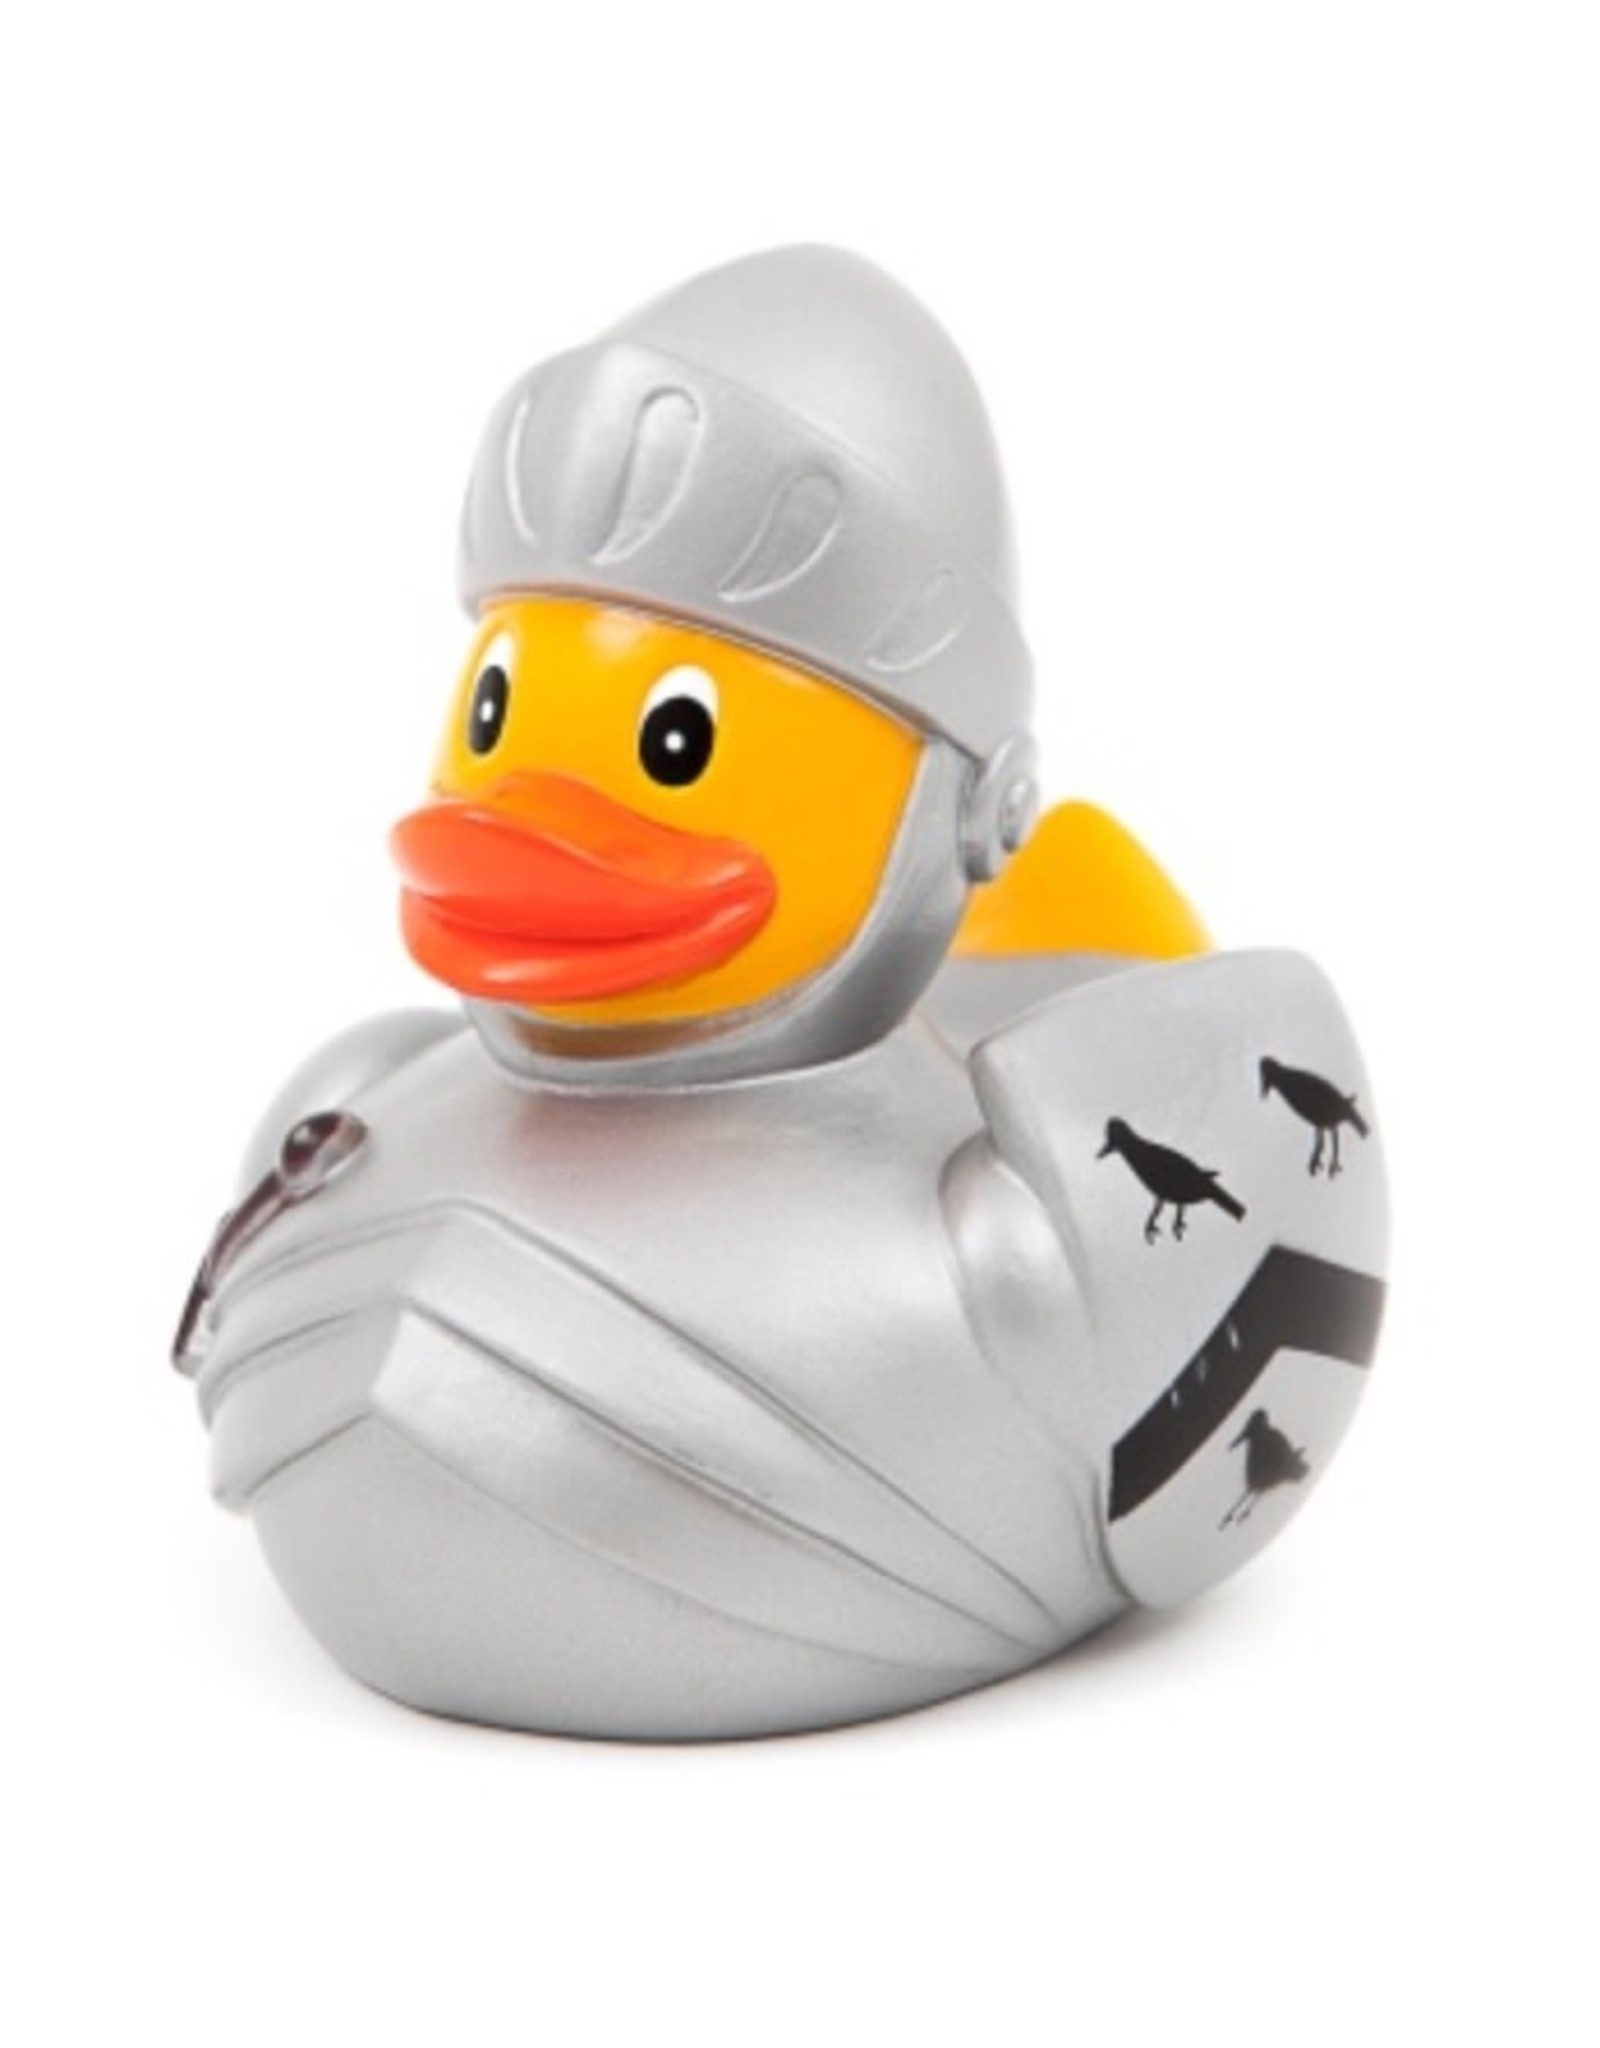 Knight Rubber Duck